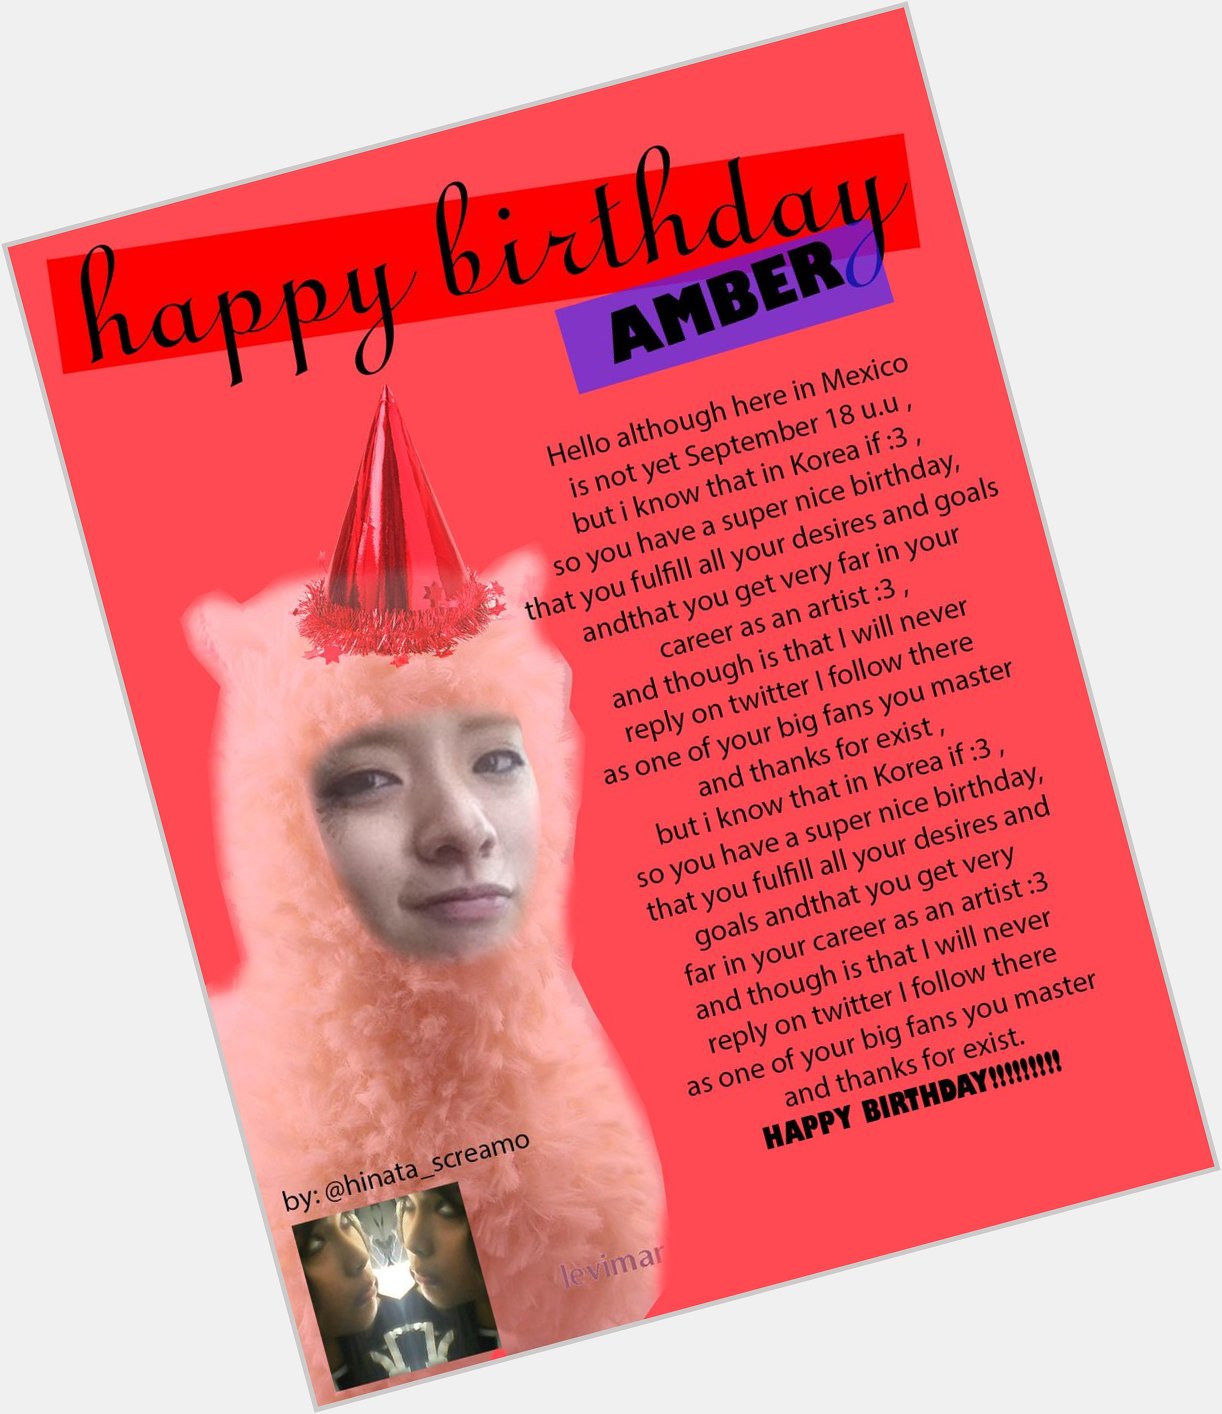  I hope you like it a lot :3 happy birthday amber :3
 AMBER LIU JOSEPHINE BY ALWAYS 